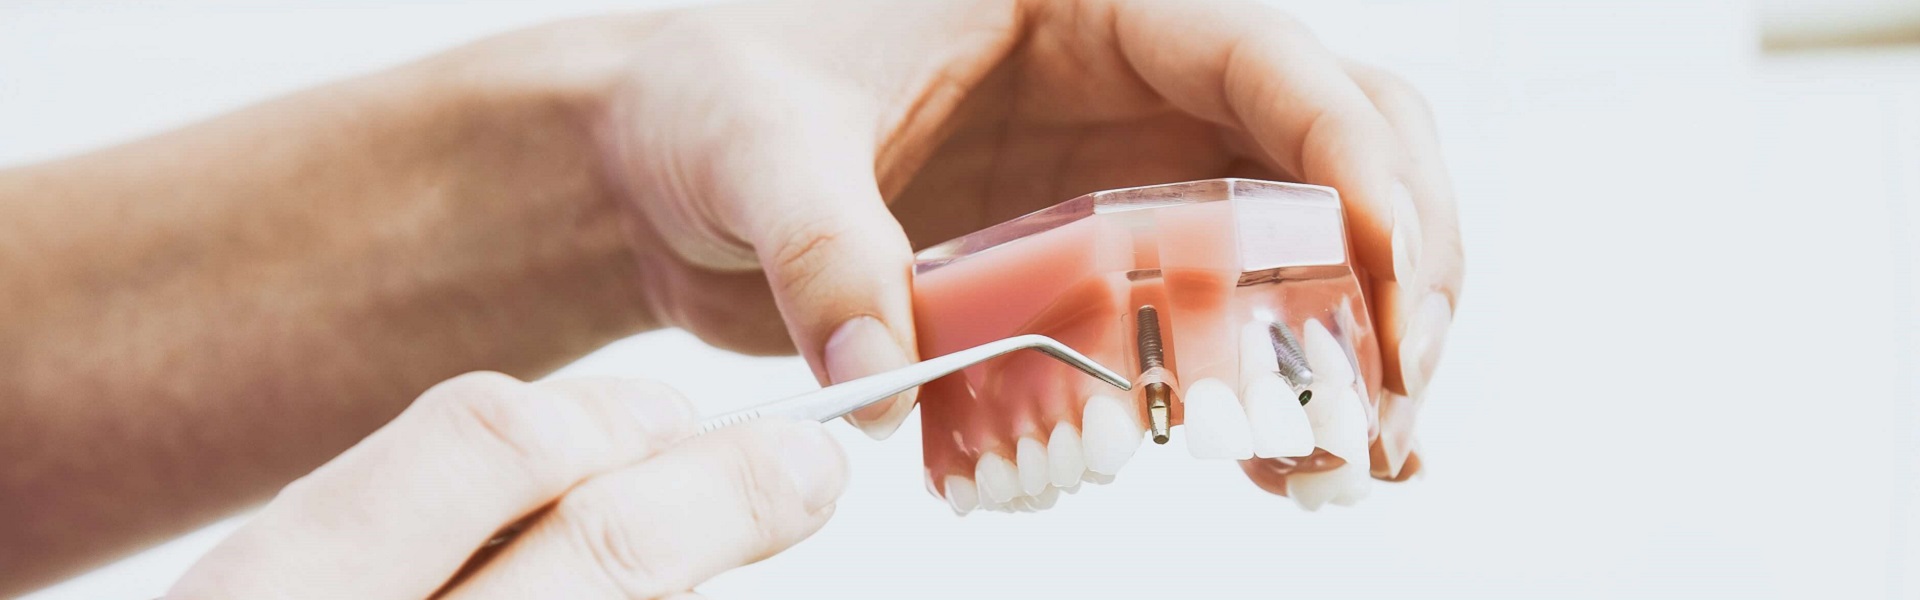 Pallet racks LAVA systems | Dental implants Belgrade